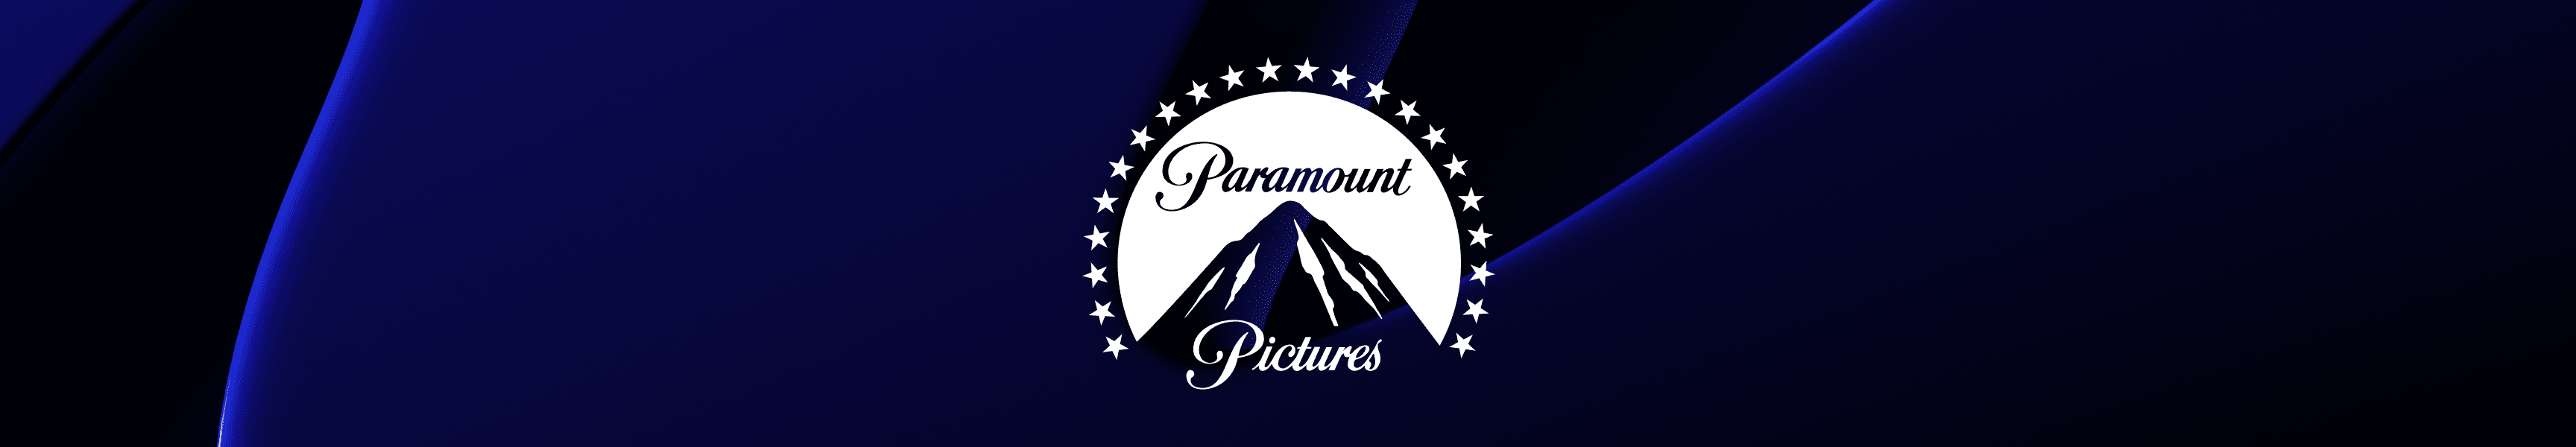 Paramount Pictures Aufkleber